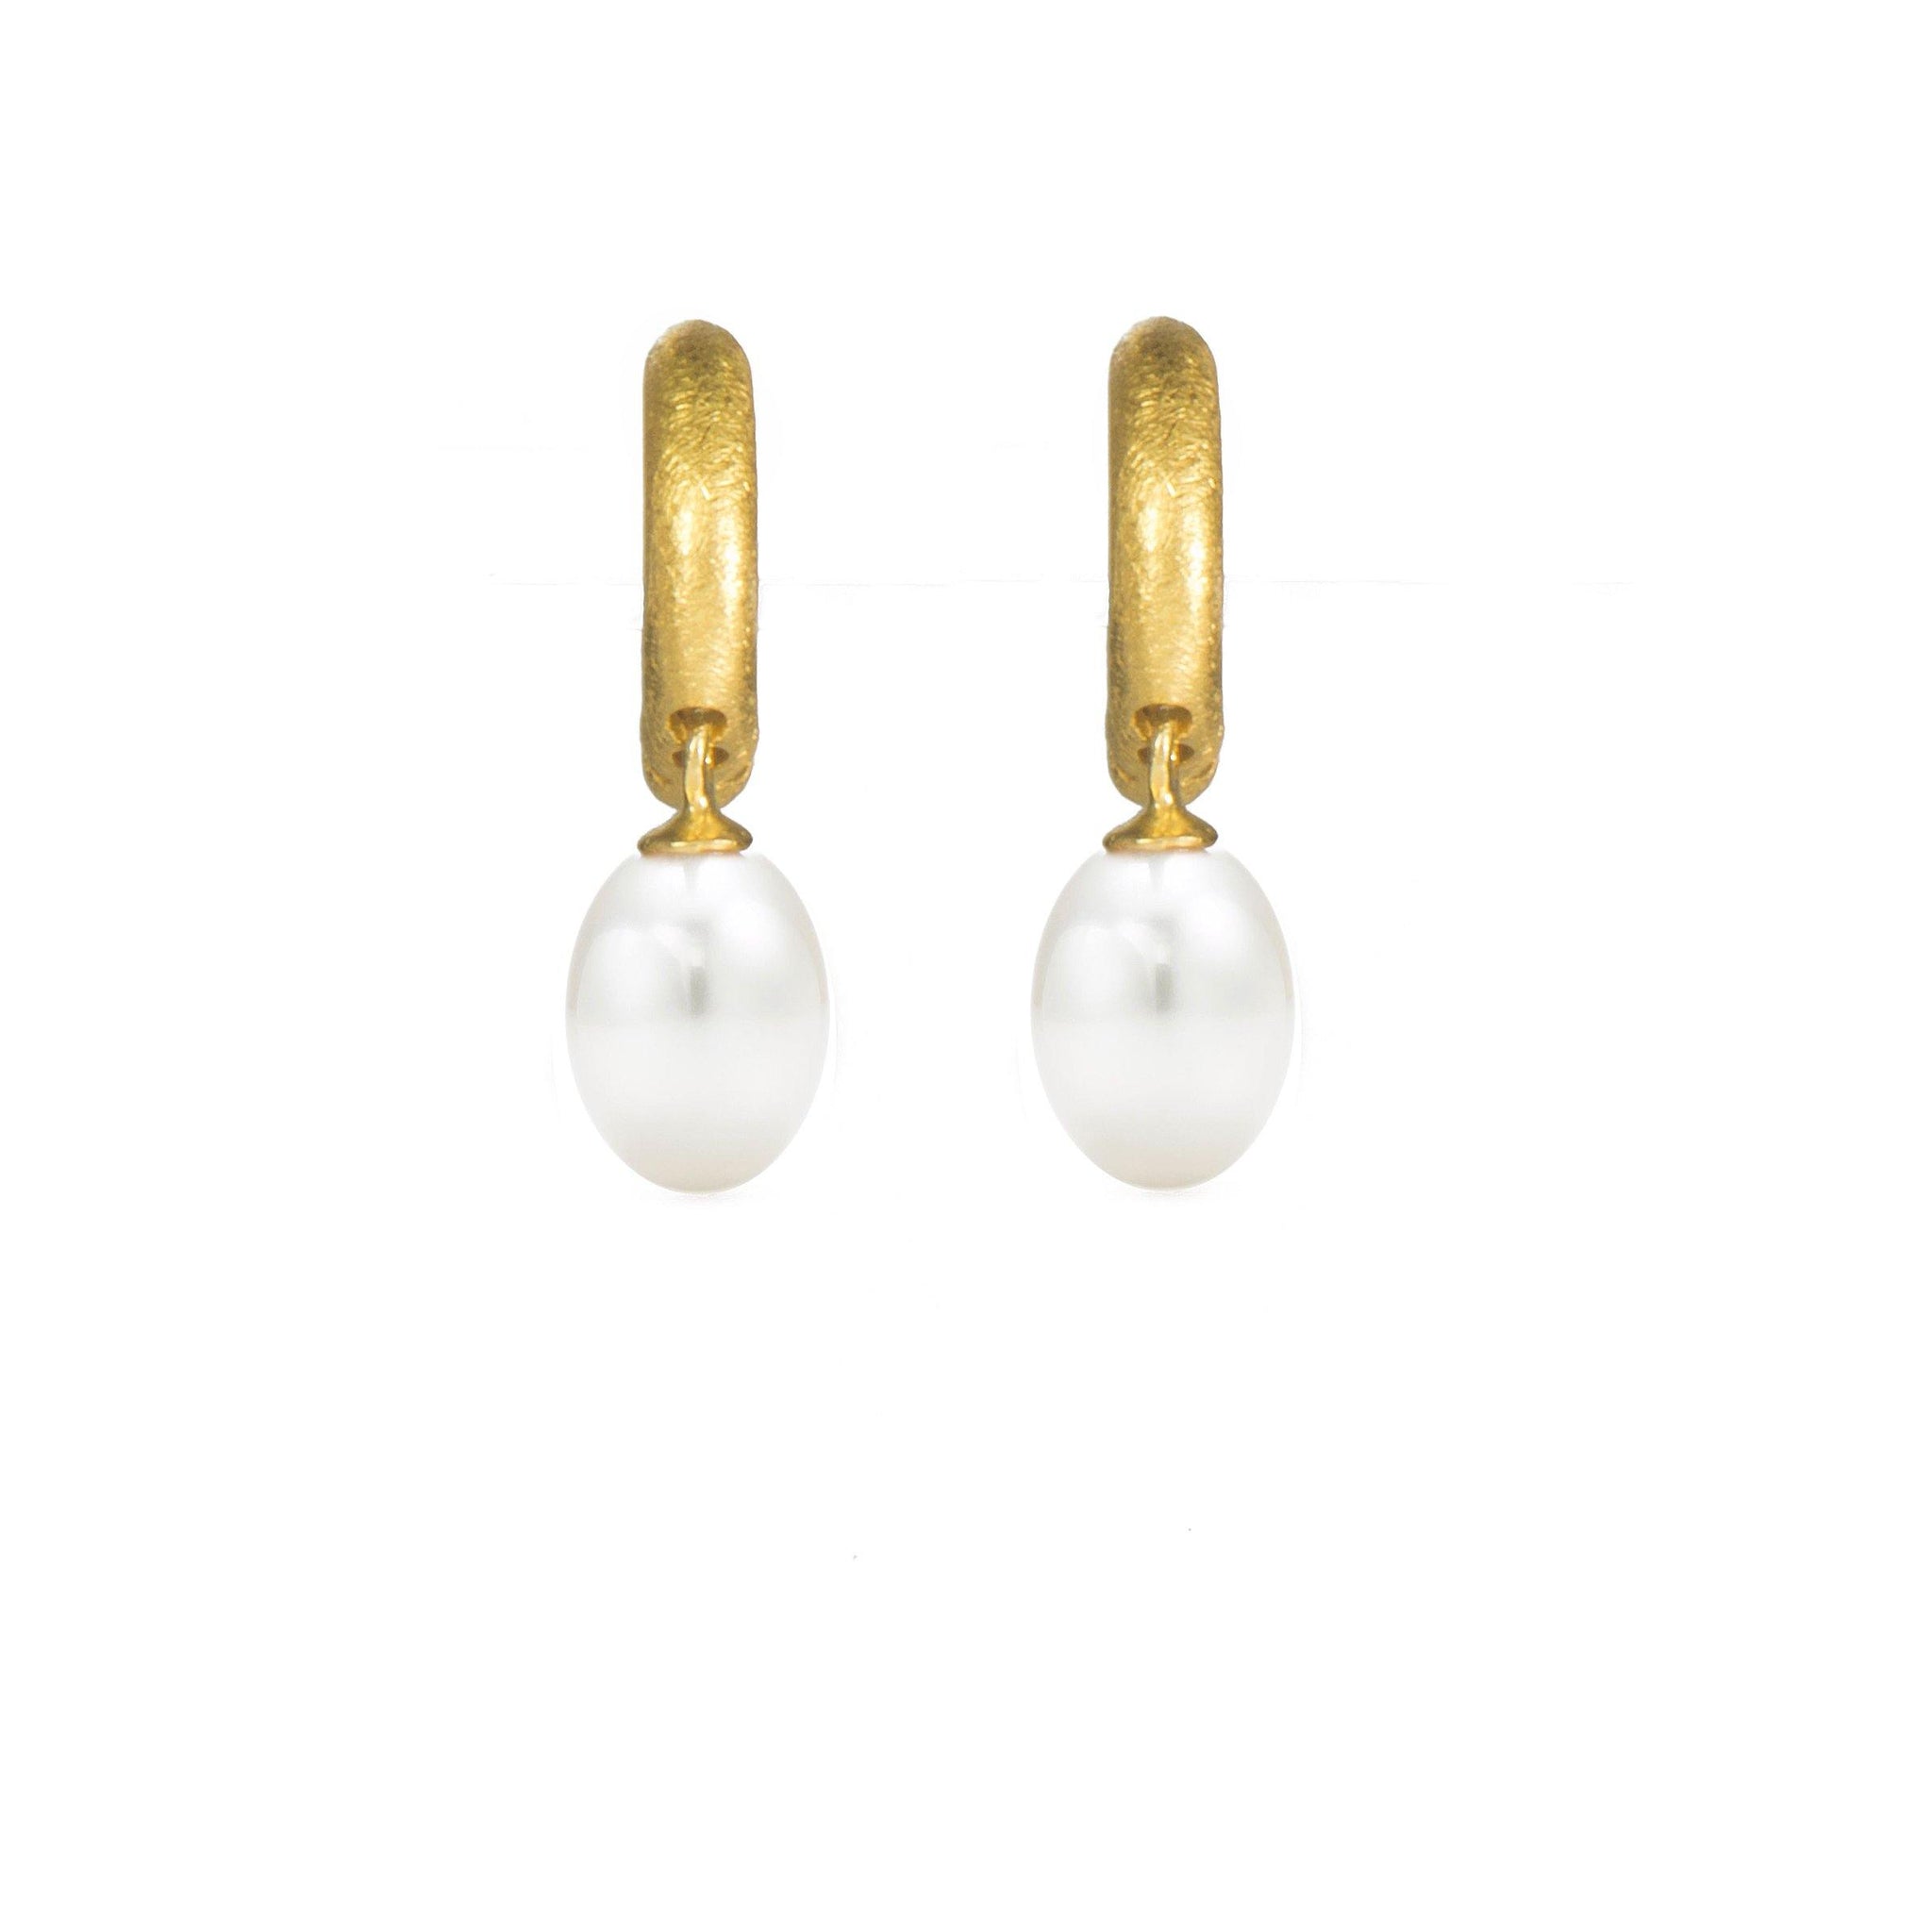 HUGGIE HOOP EARRINGS WITH A WHITE PEARL DROP FAIR TRADE 24K GOLD VERMEIL - Joyla Jewelry